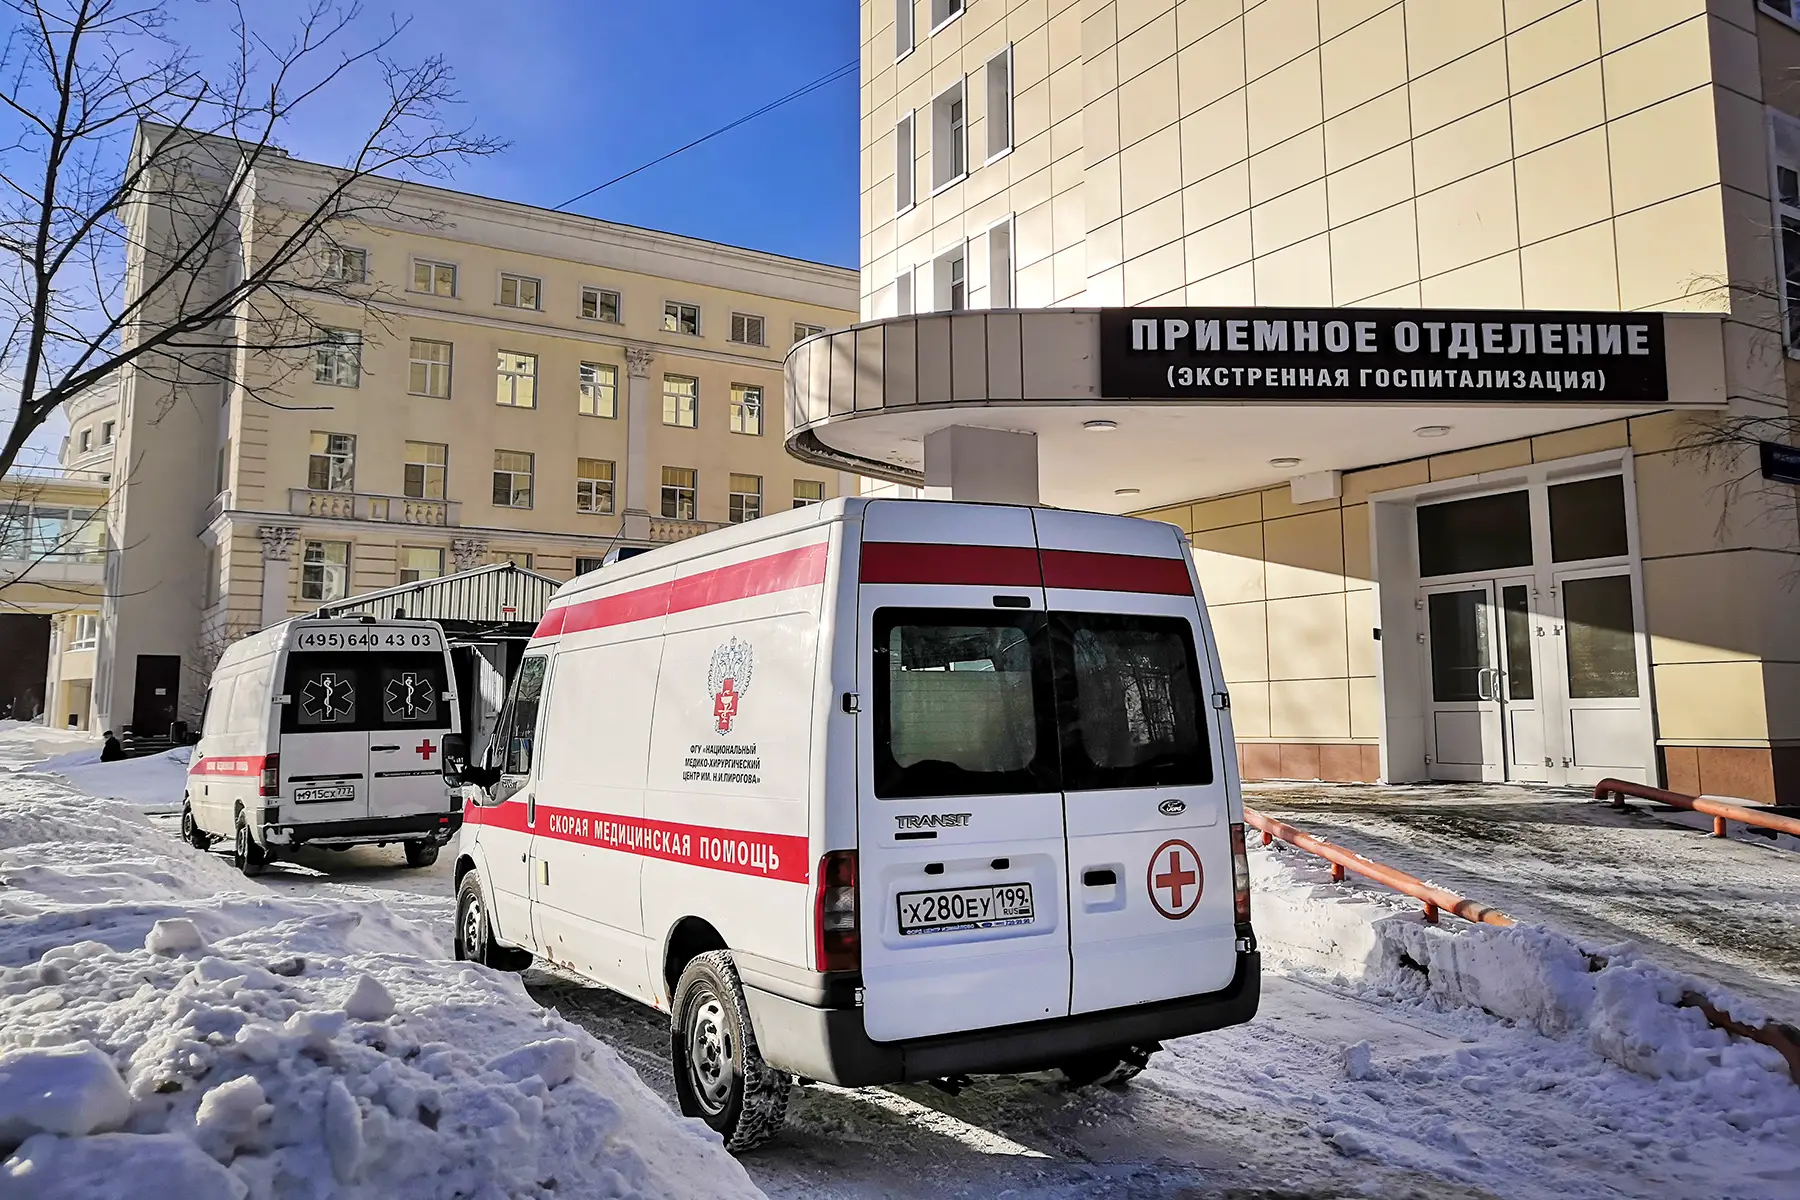 Ambulance at a hospital emergency entrance